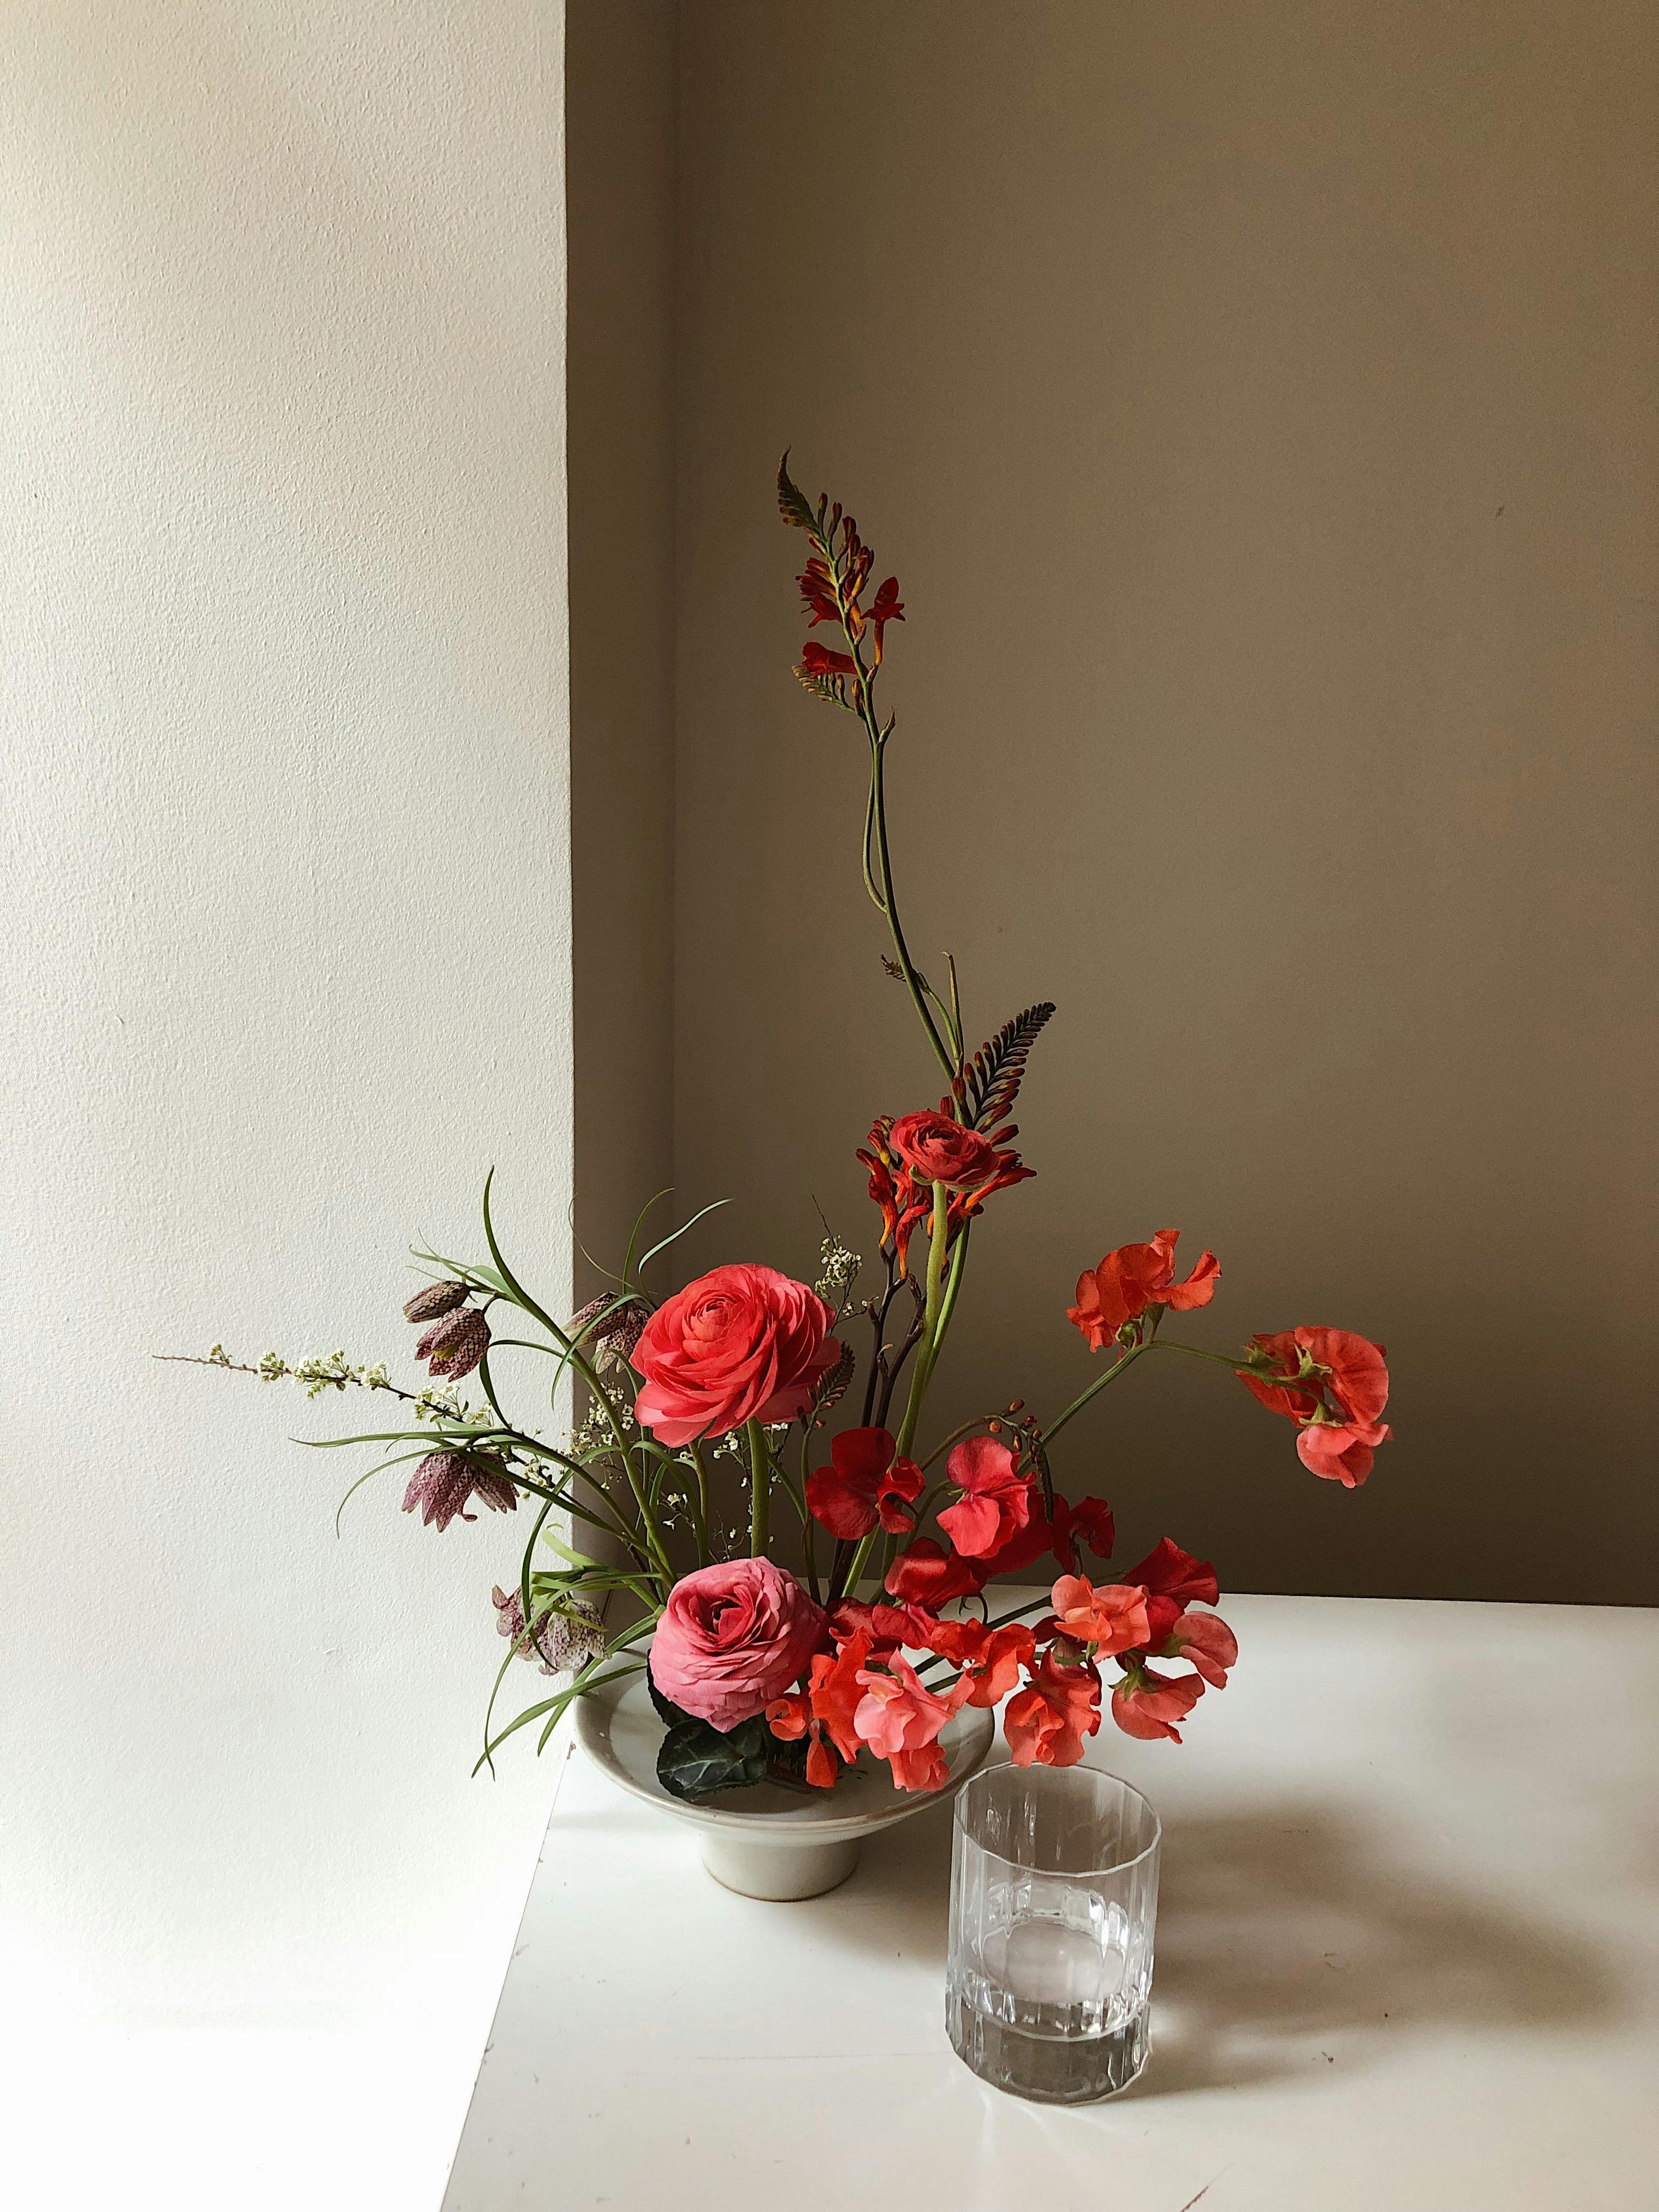 photo of flowers in vase